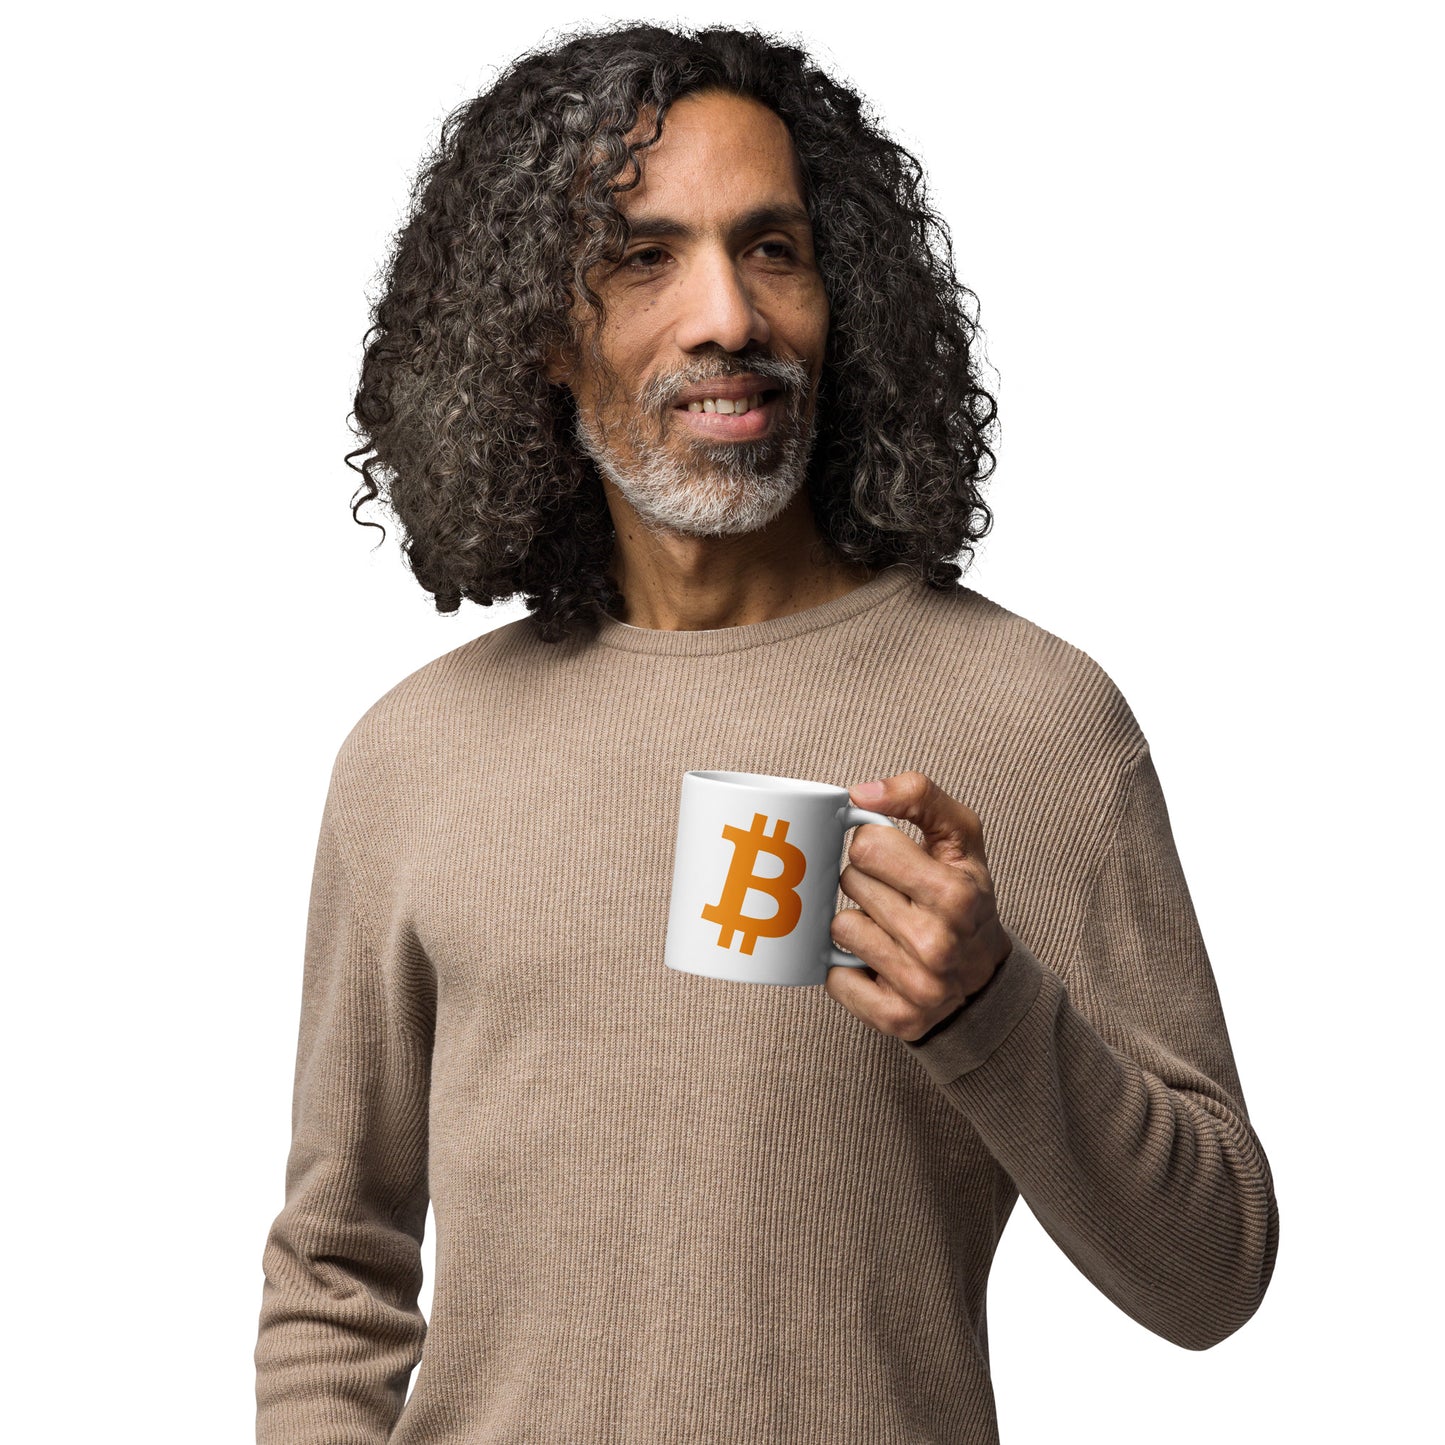 Bitcoin OG - White Glossy Mug